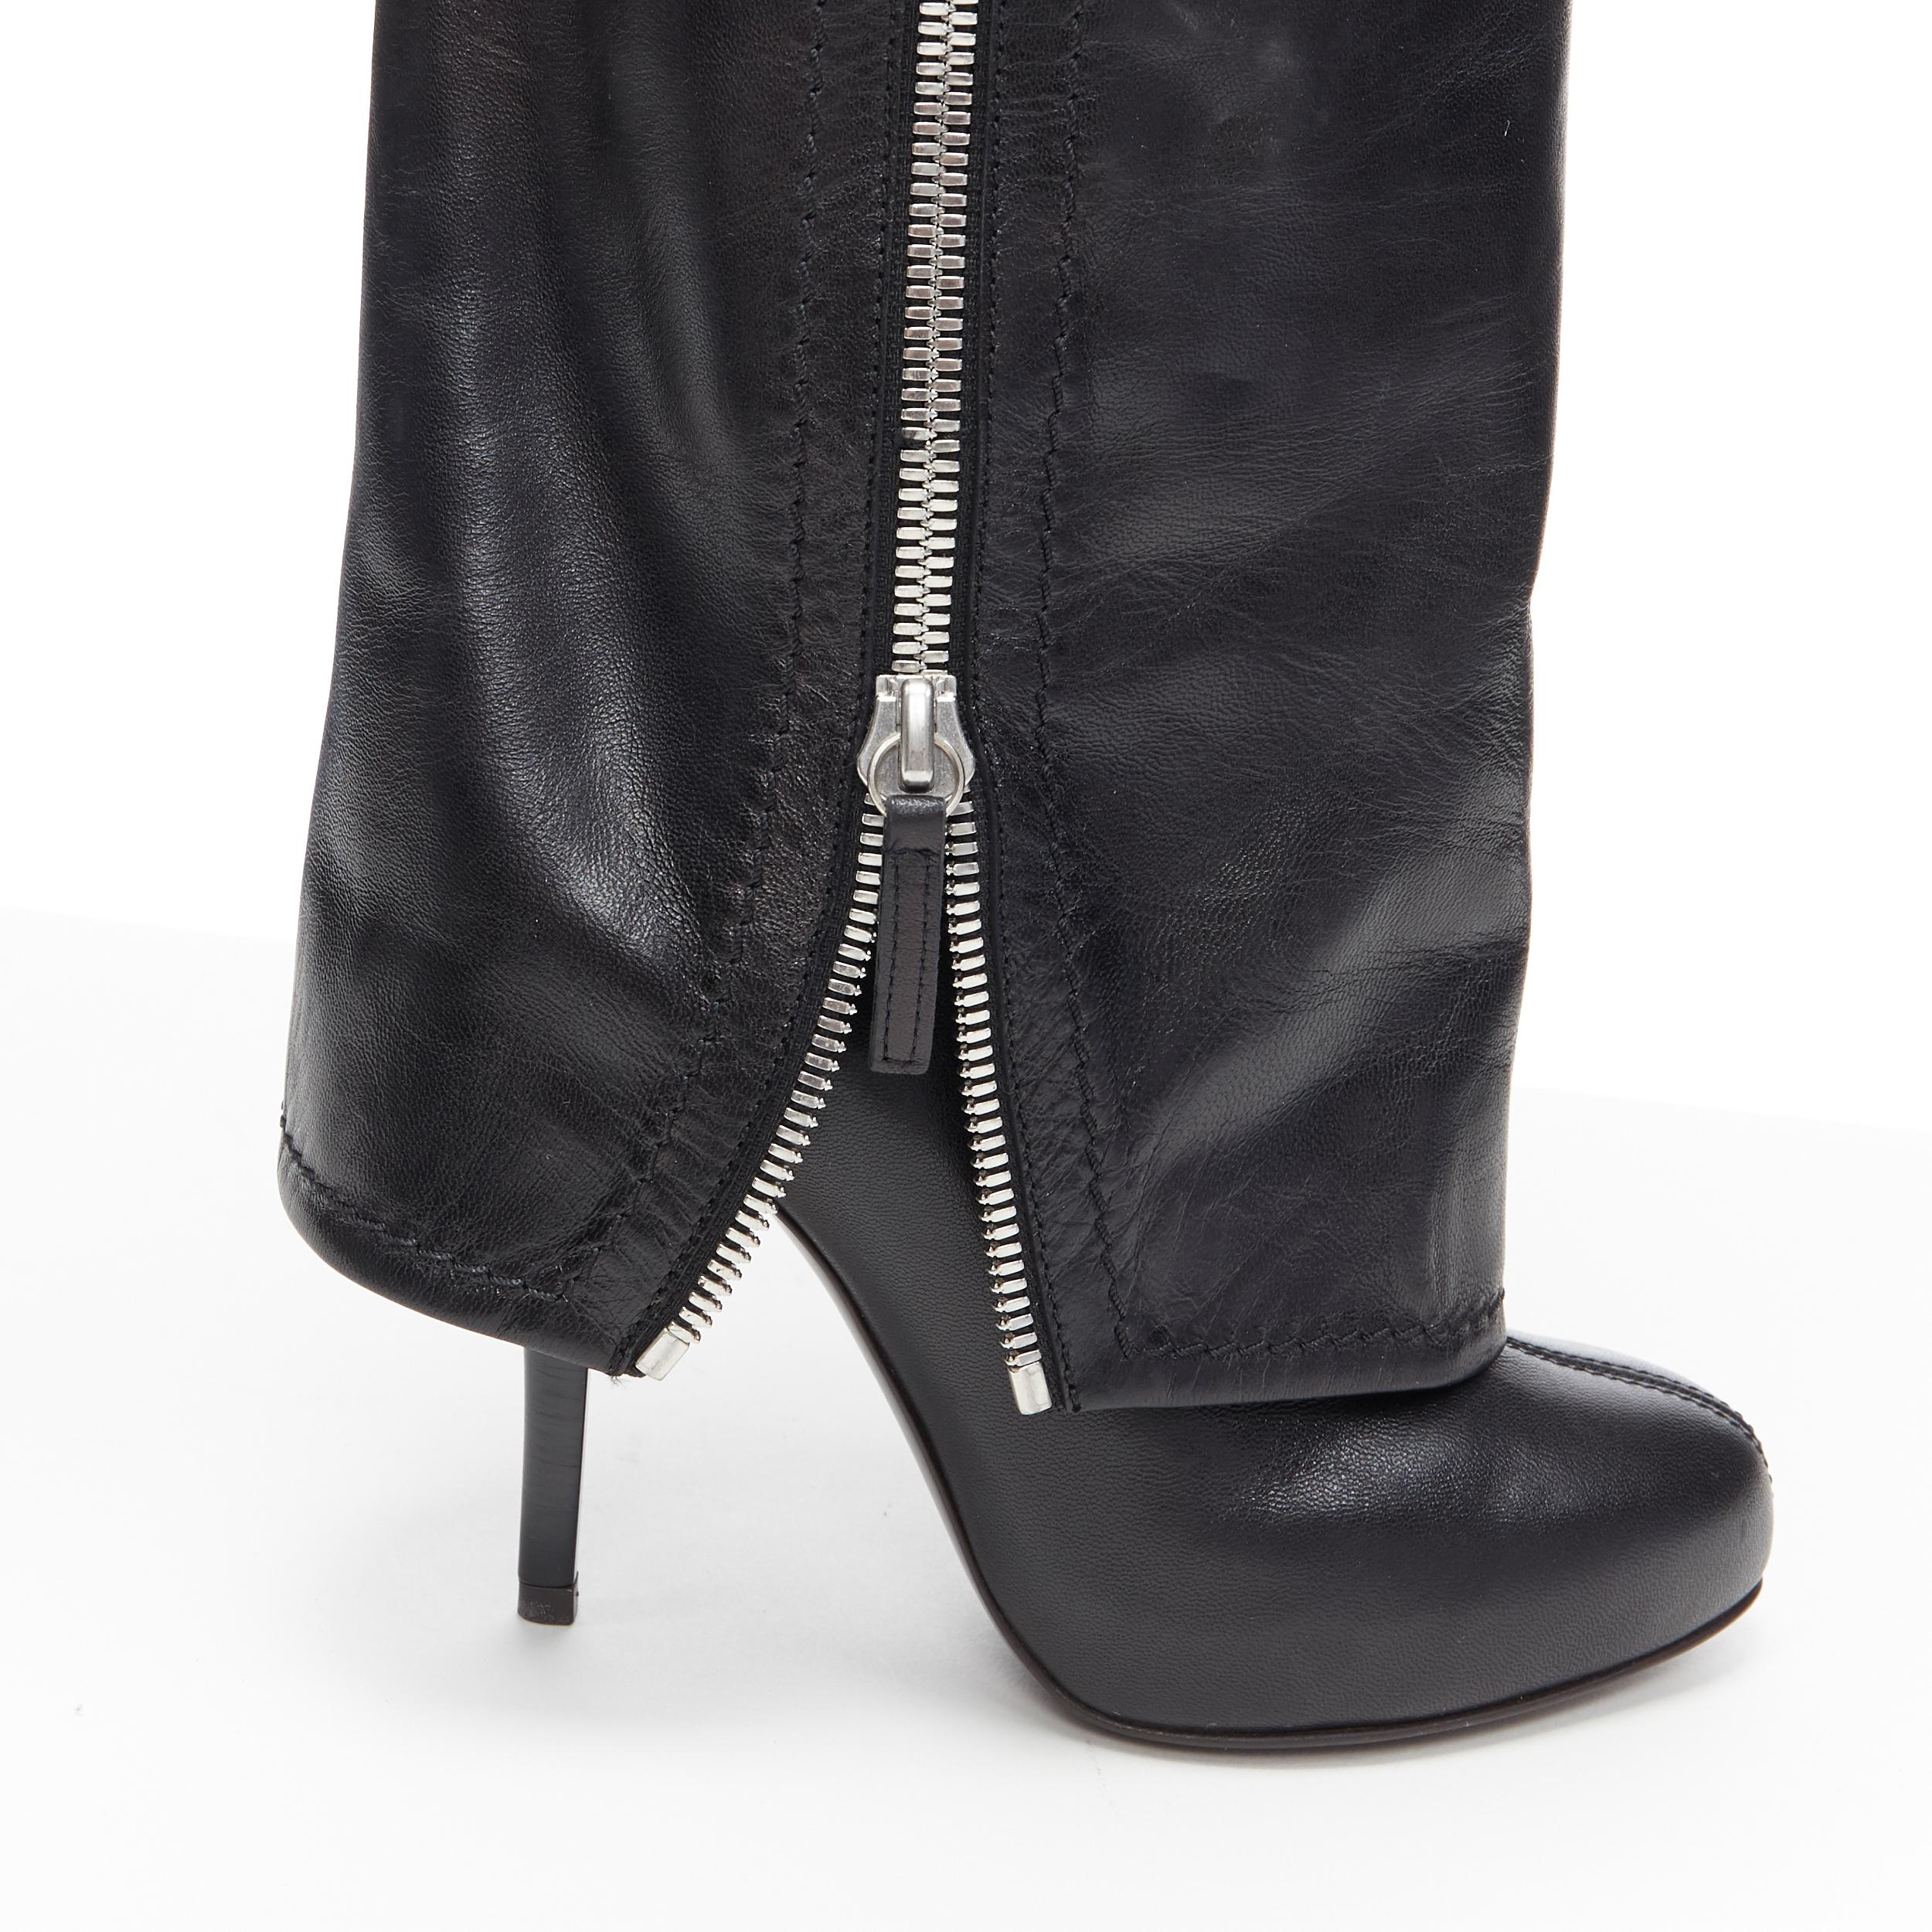 new GIUSEPPE ZANOTTI black leather zipper foldover pant high heel boot EU36 4